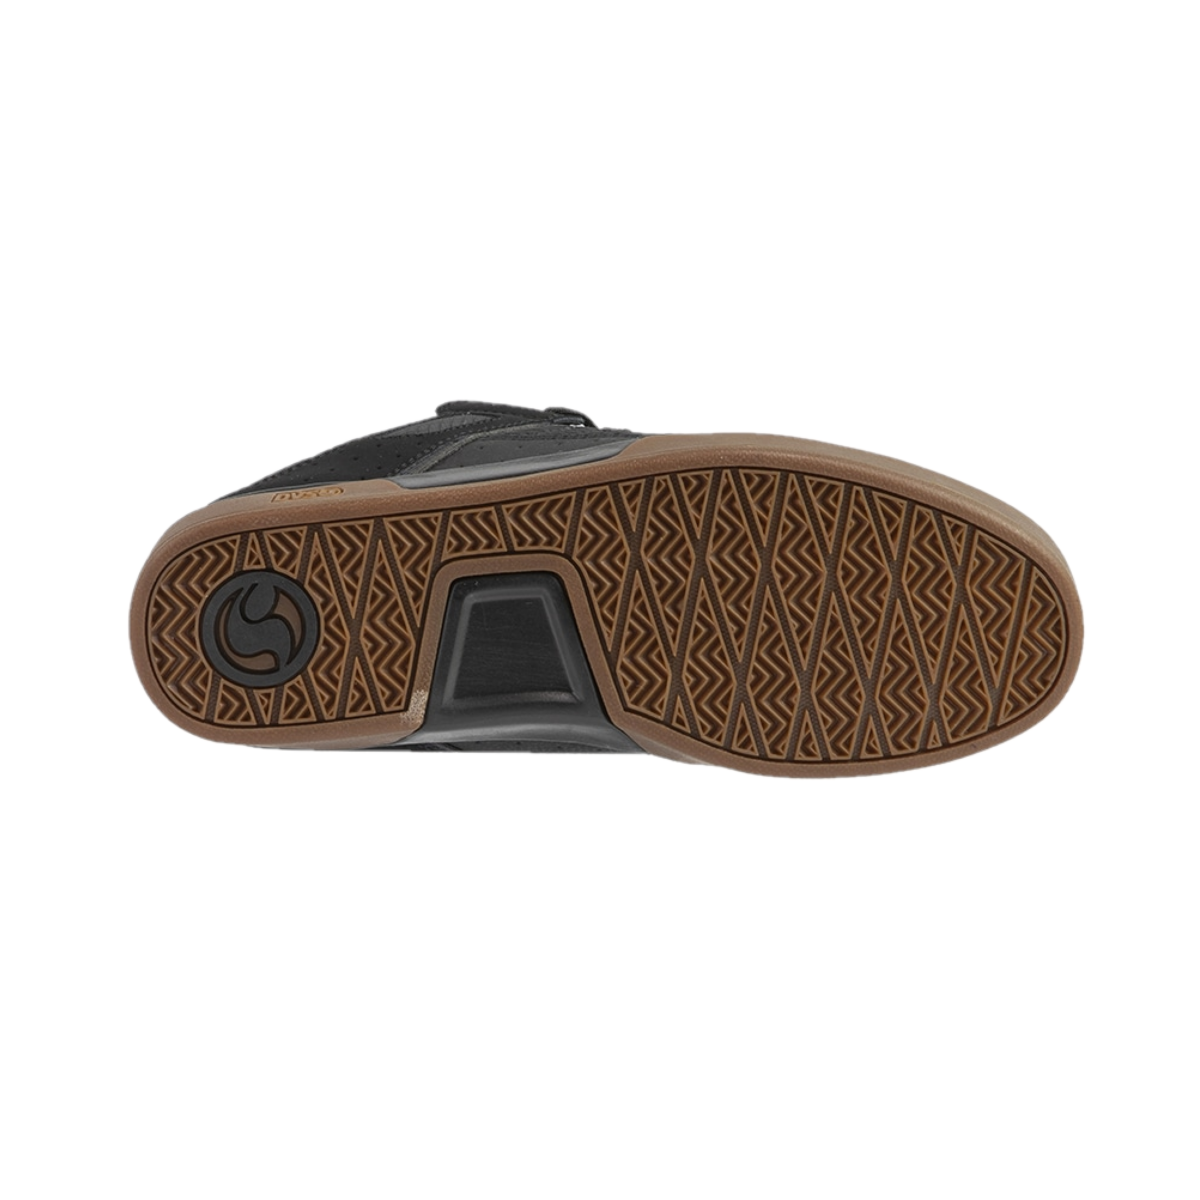 DVS F0000323007 COMANCHE 2.0+ DAVE B. MN'S (Medium) Black/Gum Leather Skate Shoes